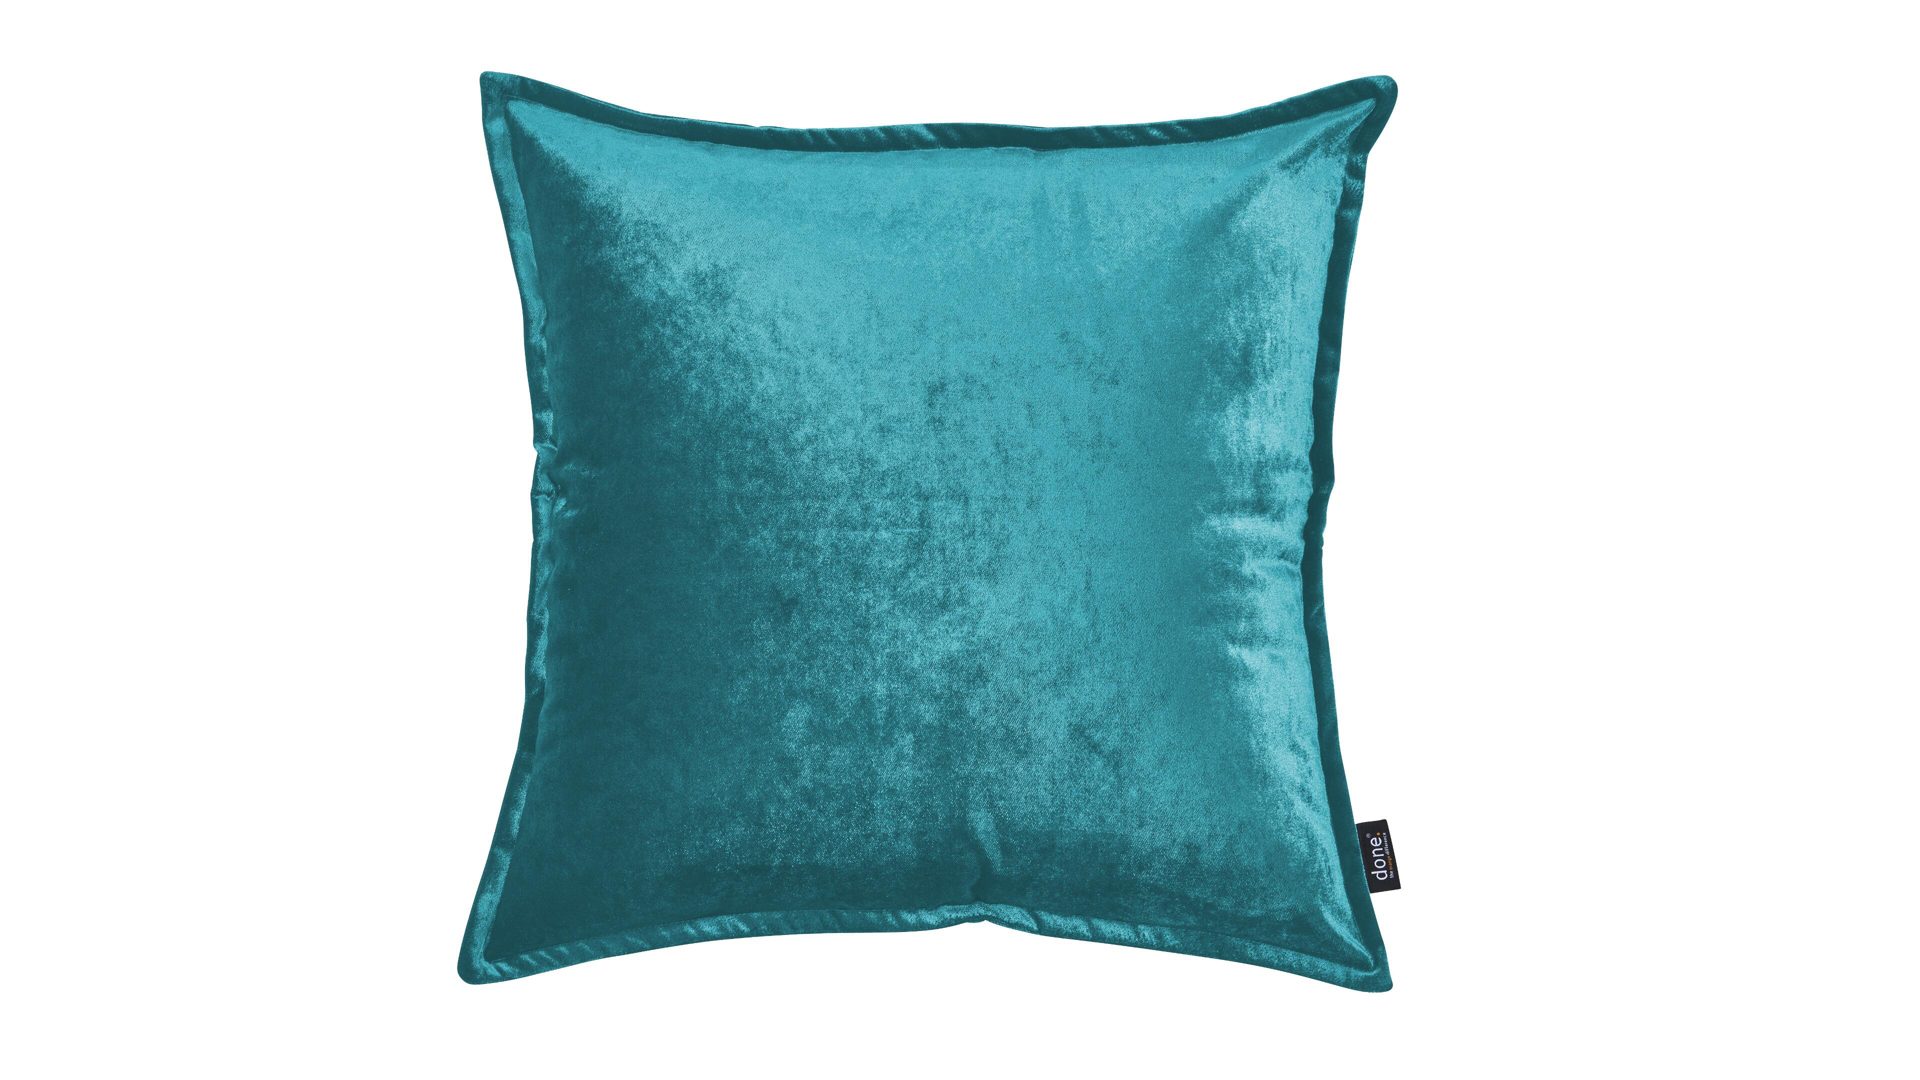 Kissenbezug /-hülle Done by karabel home company aus Stoff in Blau Done Kissenhülle Cushion Glam aquafarbener Samt - ca. 65 x 65 cm